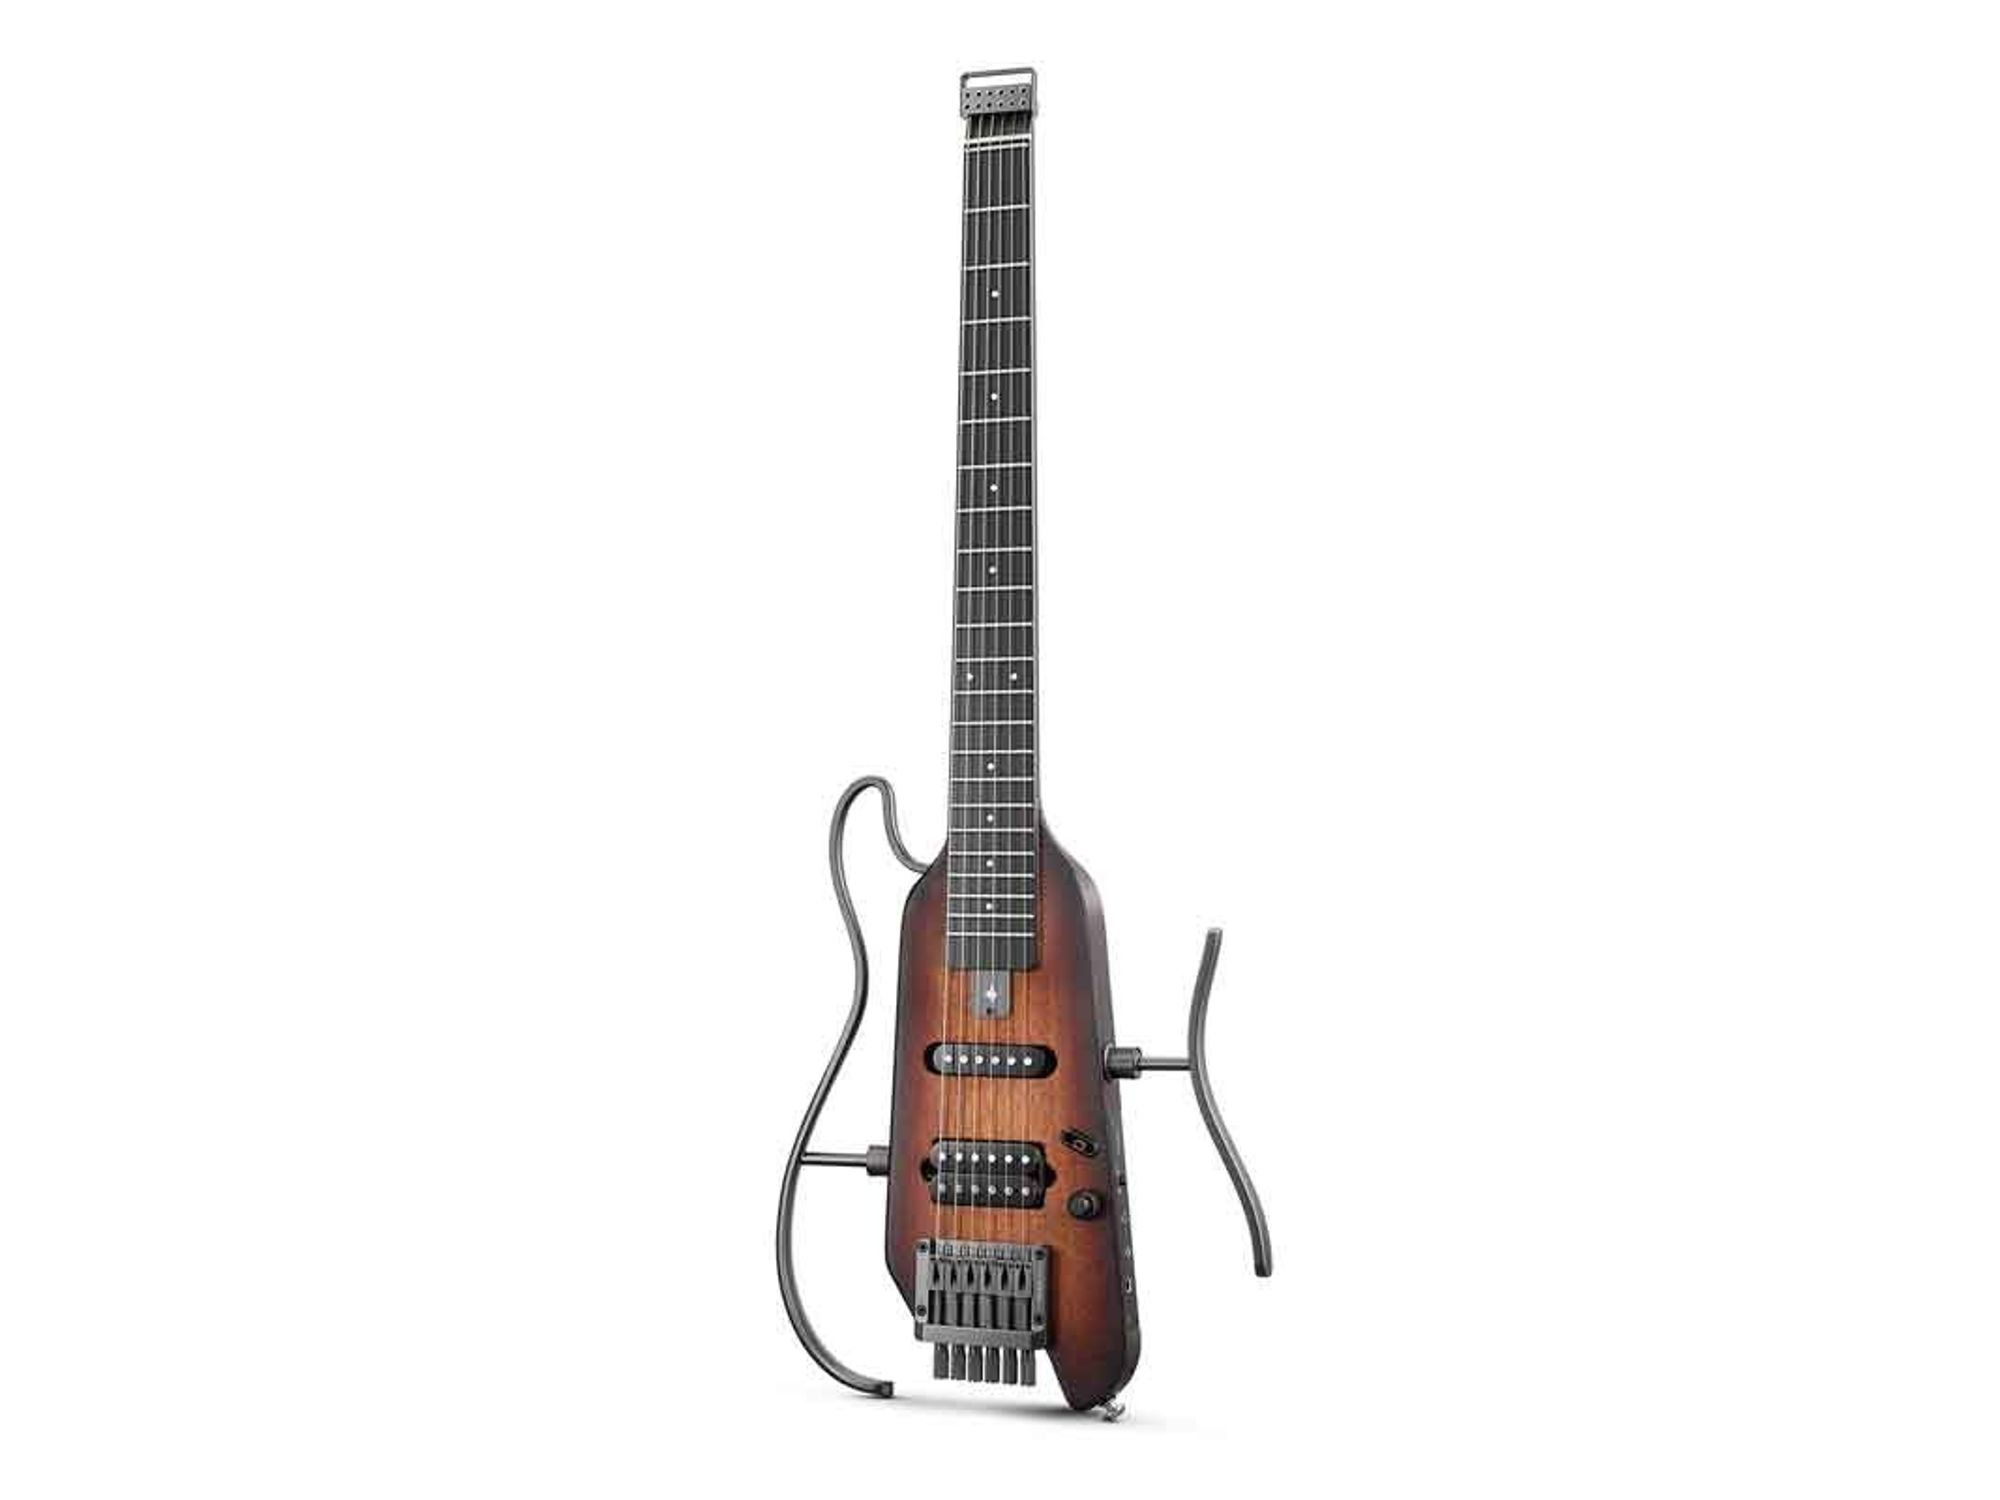 Donner unveil HUSH-X headless guitar at NAMM 2023